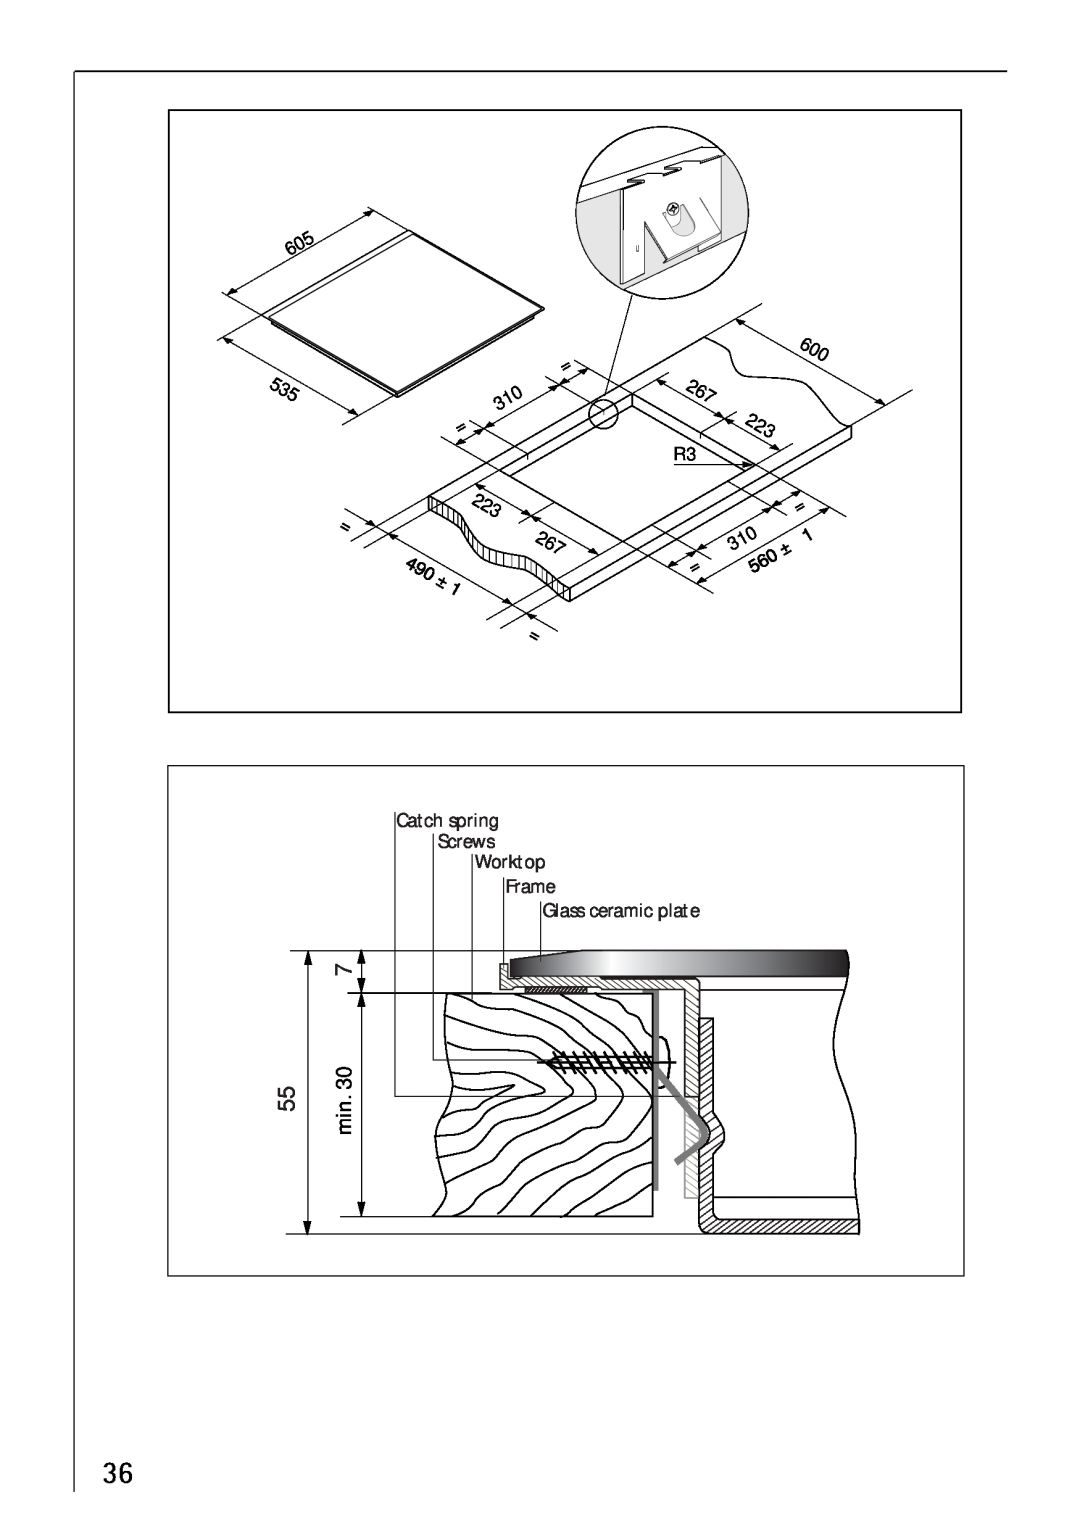 Electrolux 66300KF-an installation instructions Catch spring, Screws, Frame, Glass ceramic plate, Worktop 